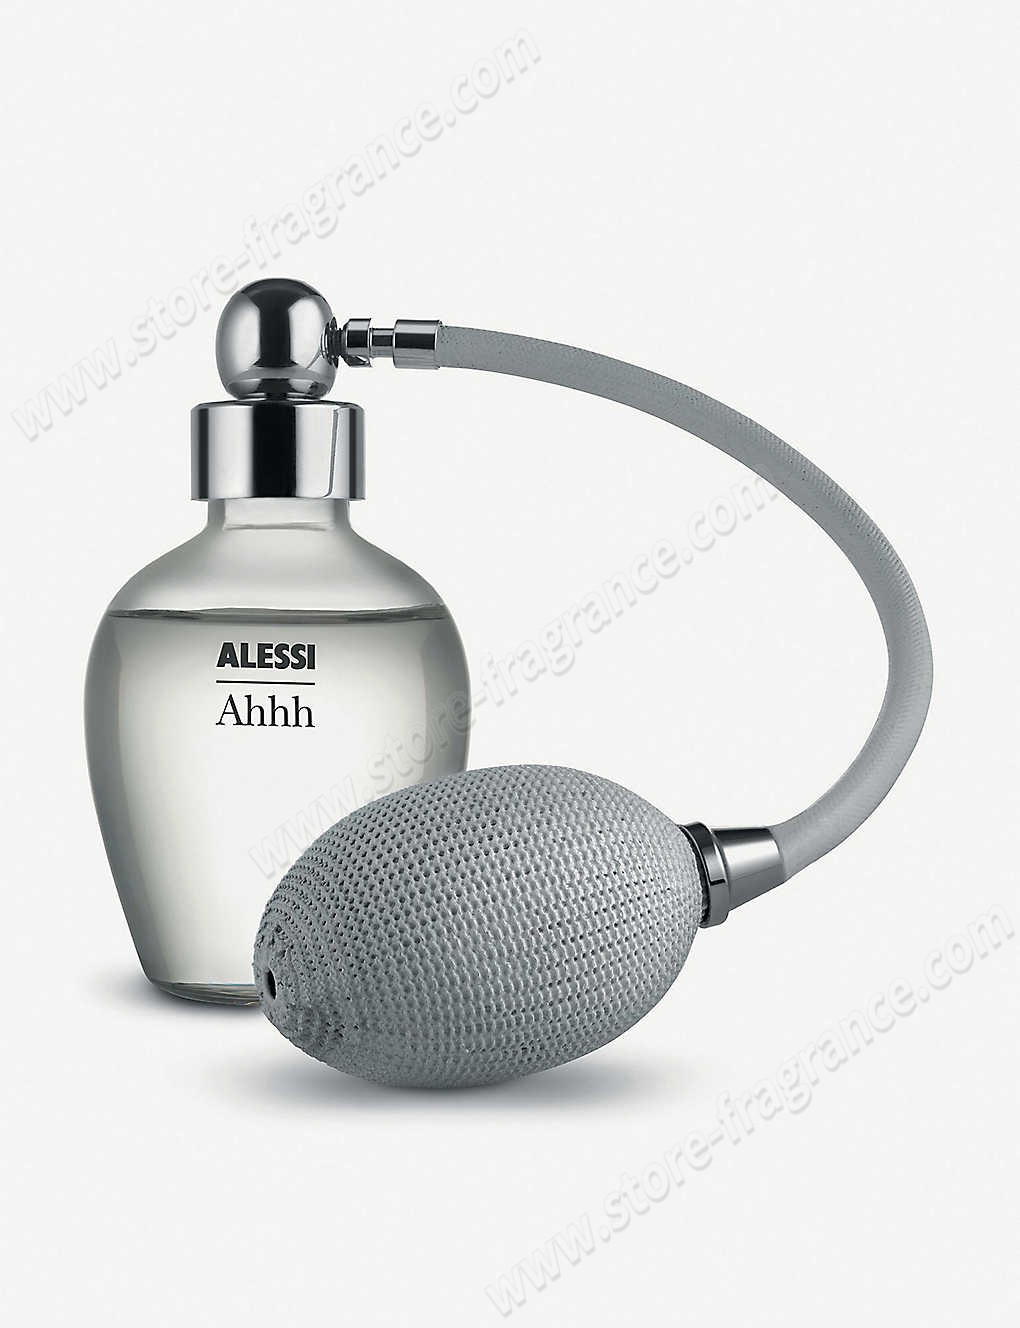 ALESSI/Five Seasons Ahhh room spray 150ml Limit Offer - -1